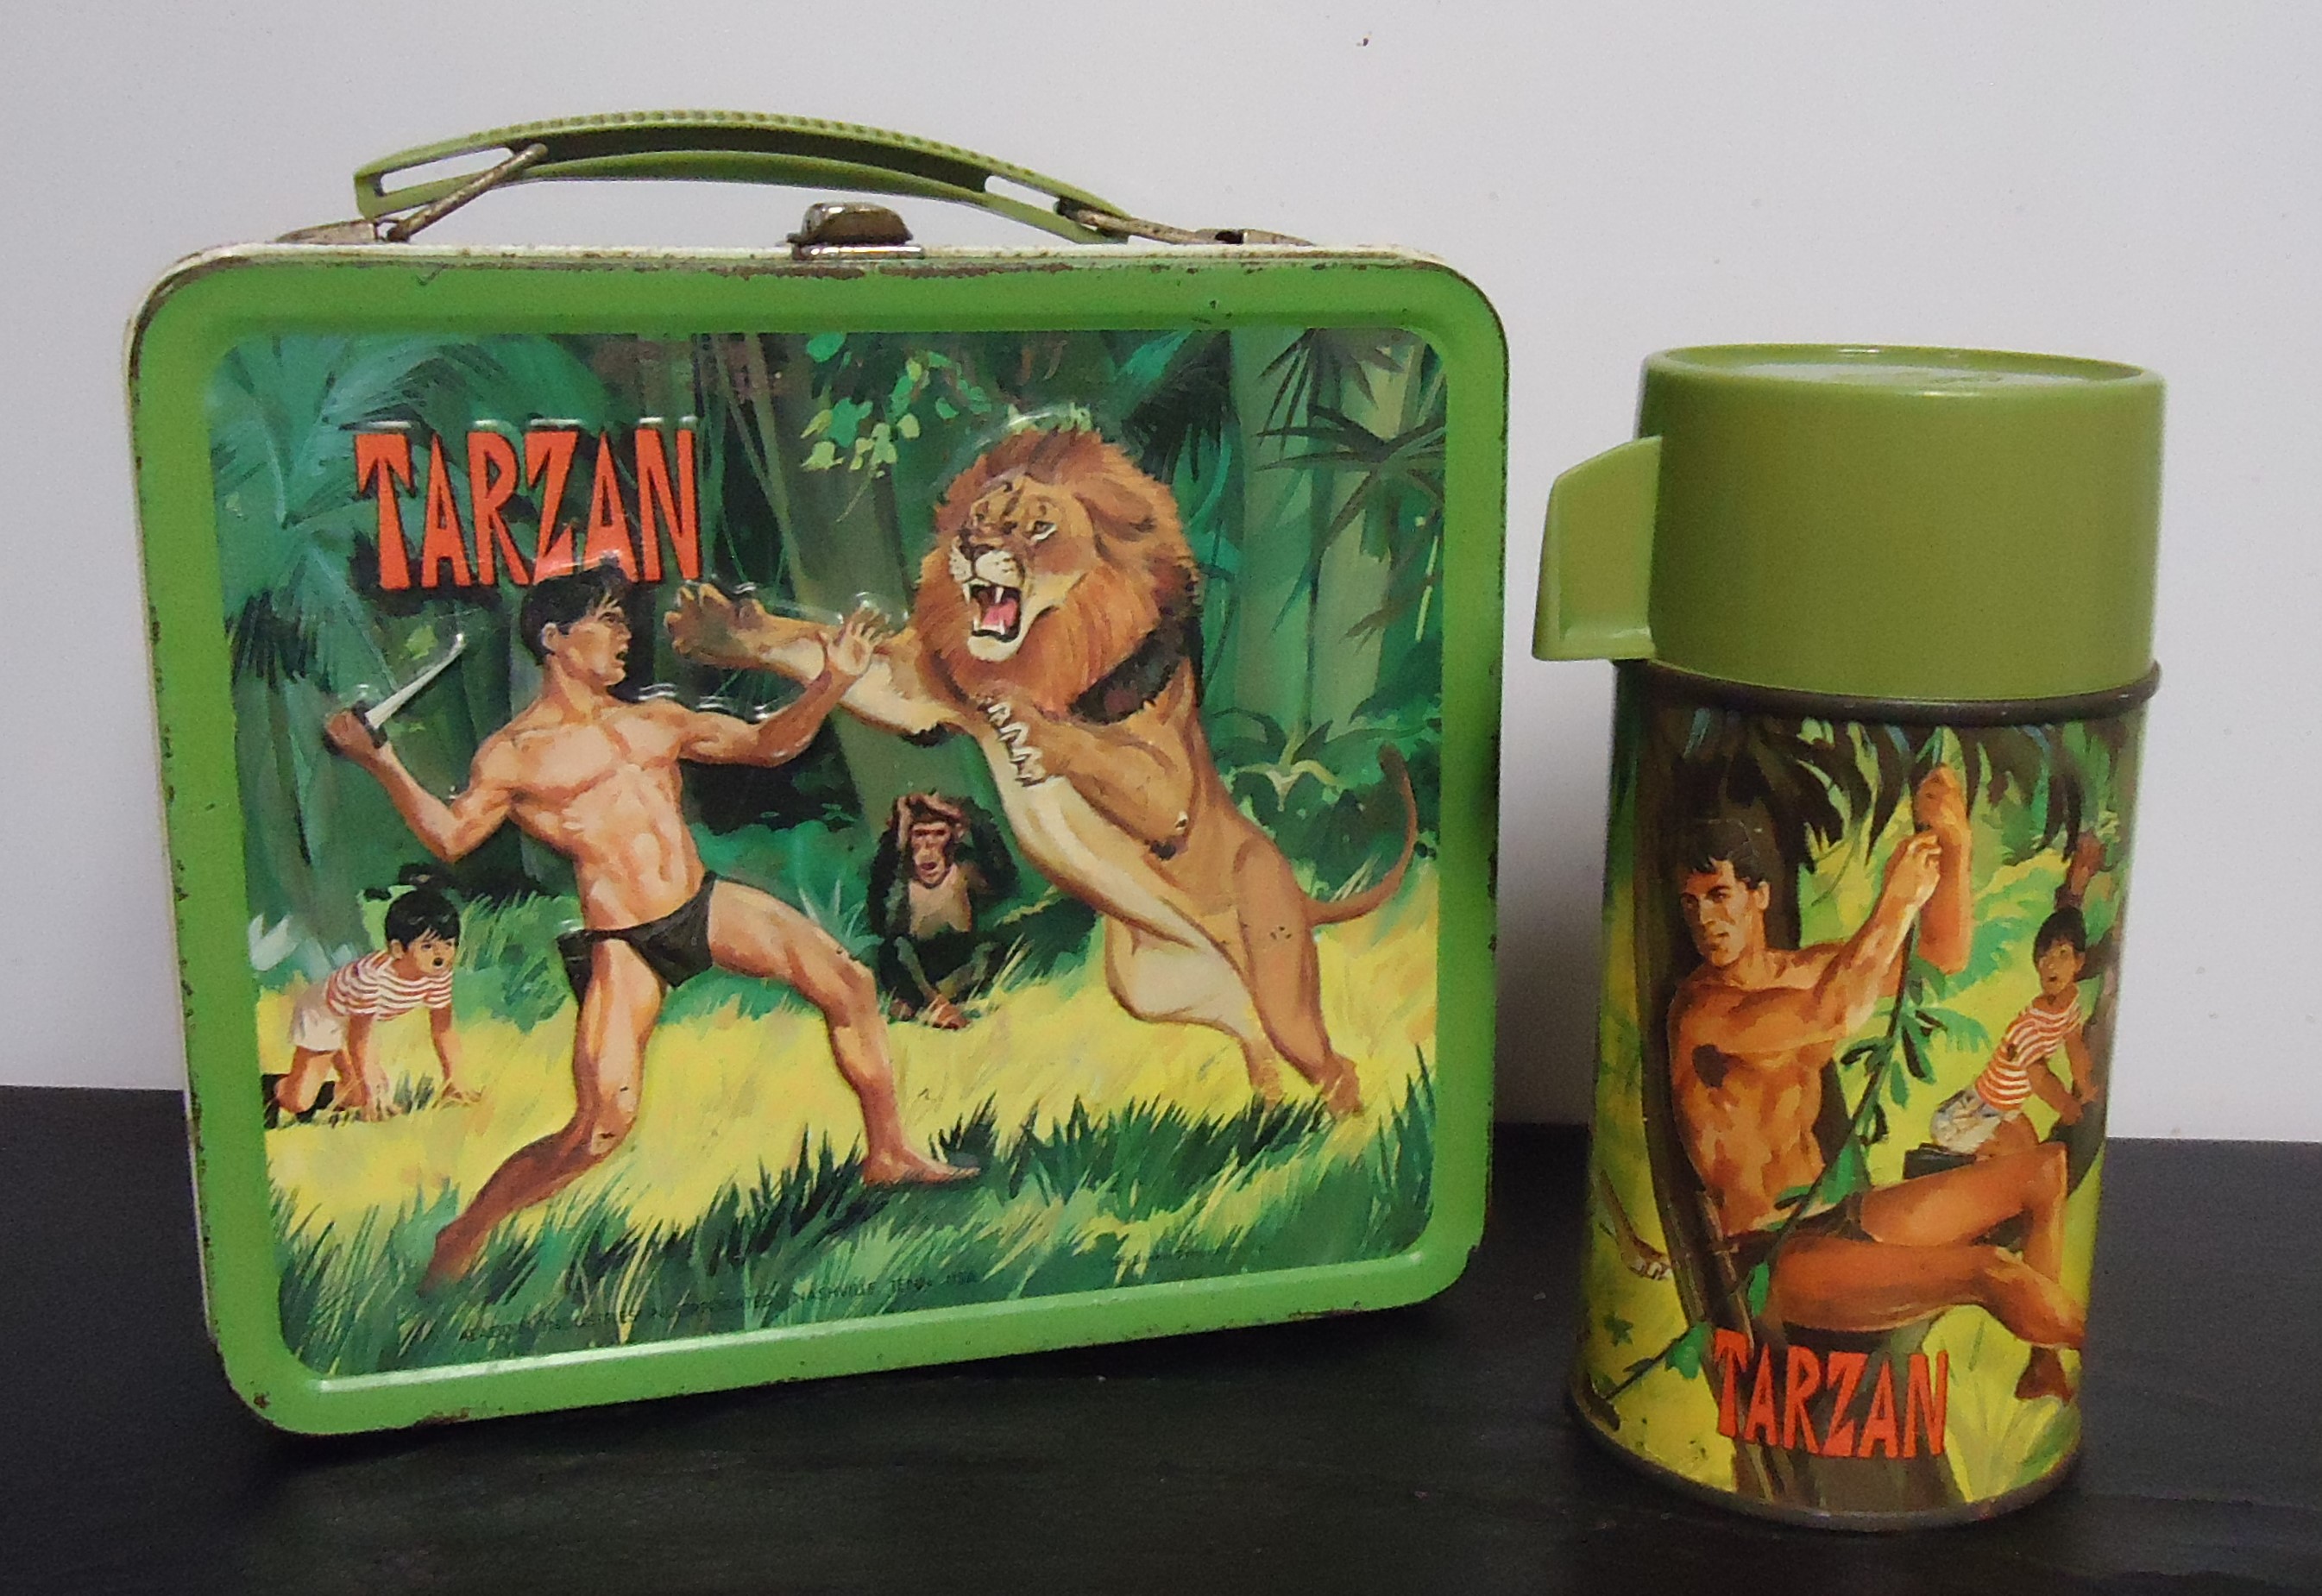 (2) "Tarzan" Metal Lunch Box
W/ Thermos
$150.00